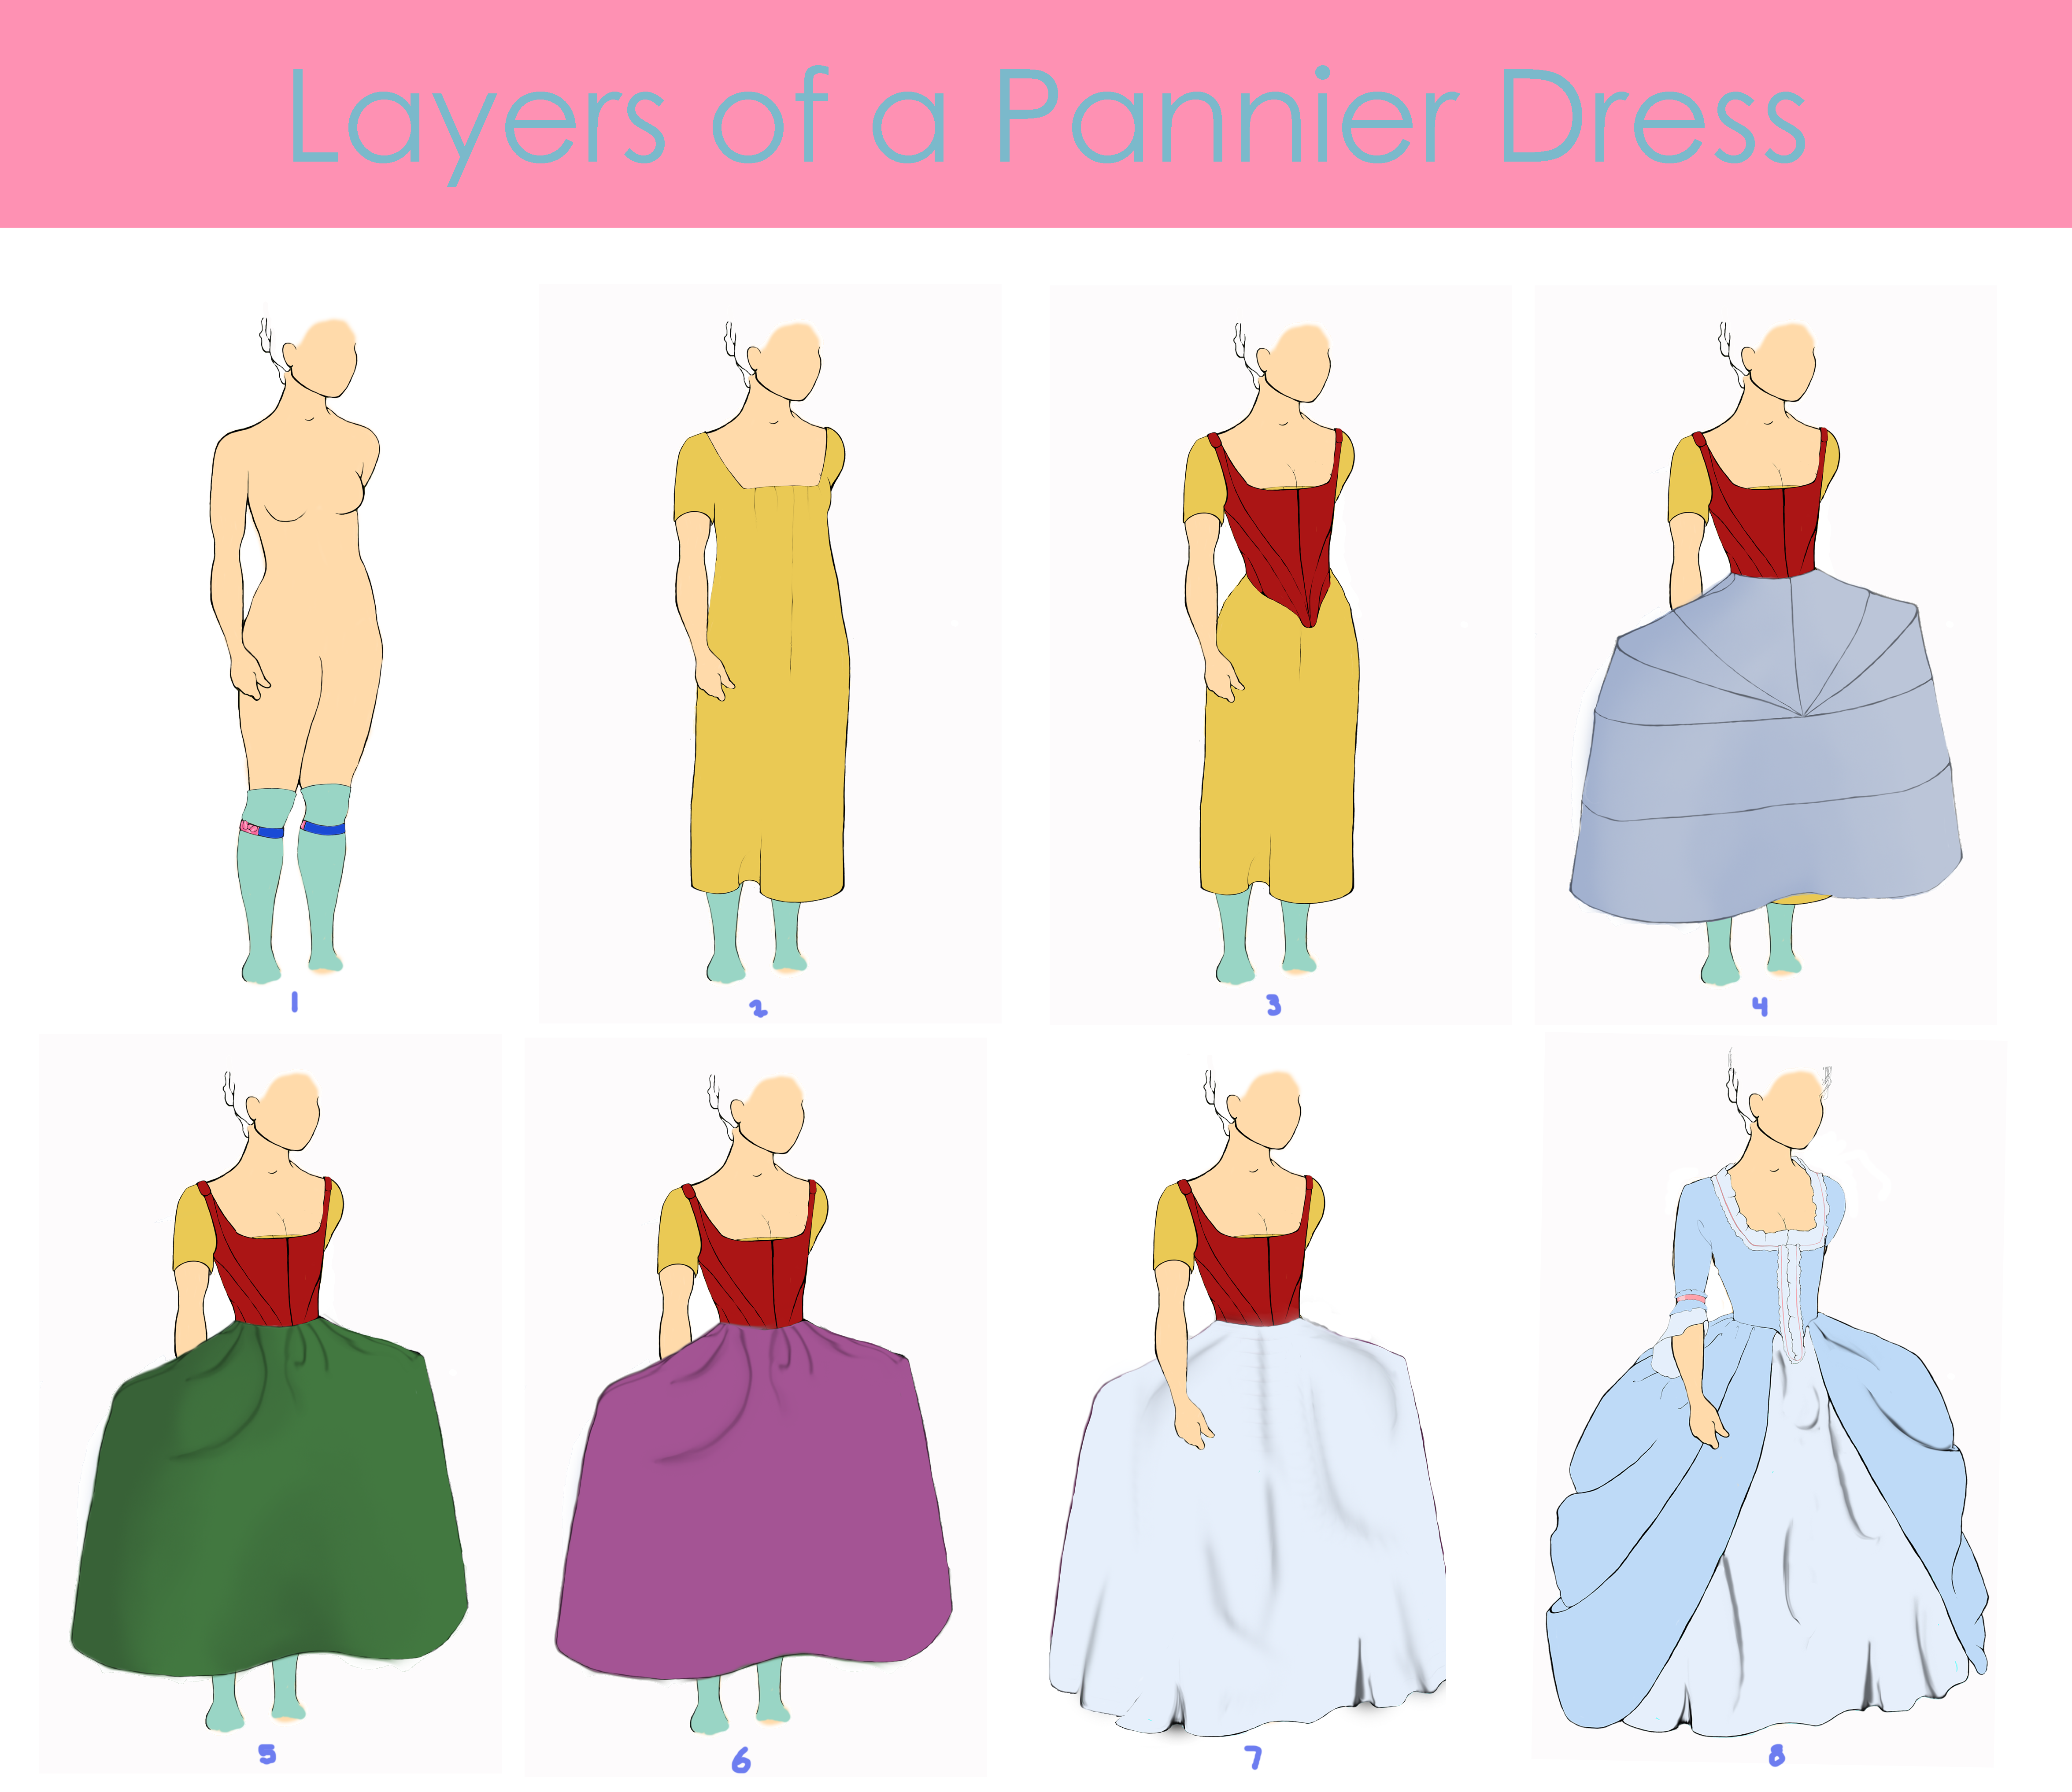 panniers dress